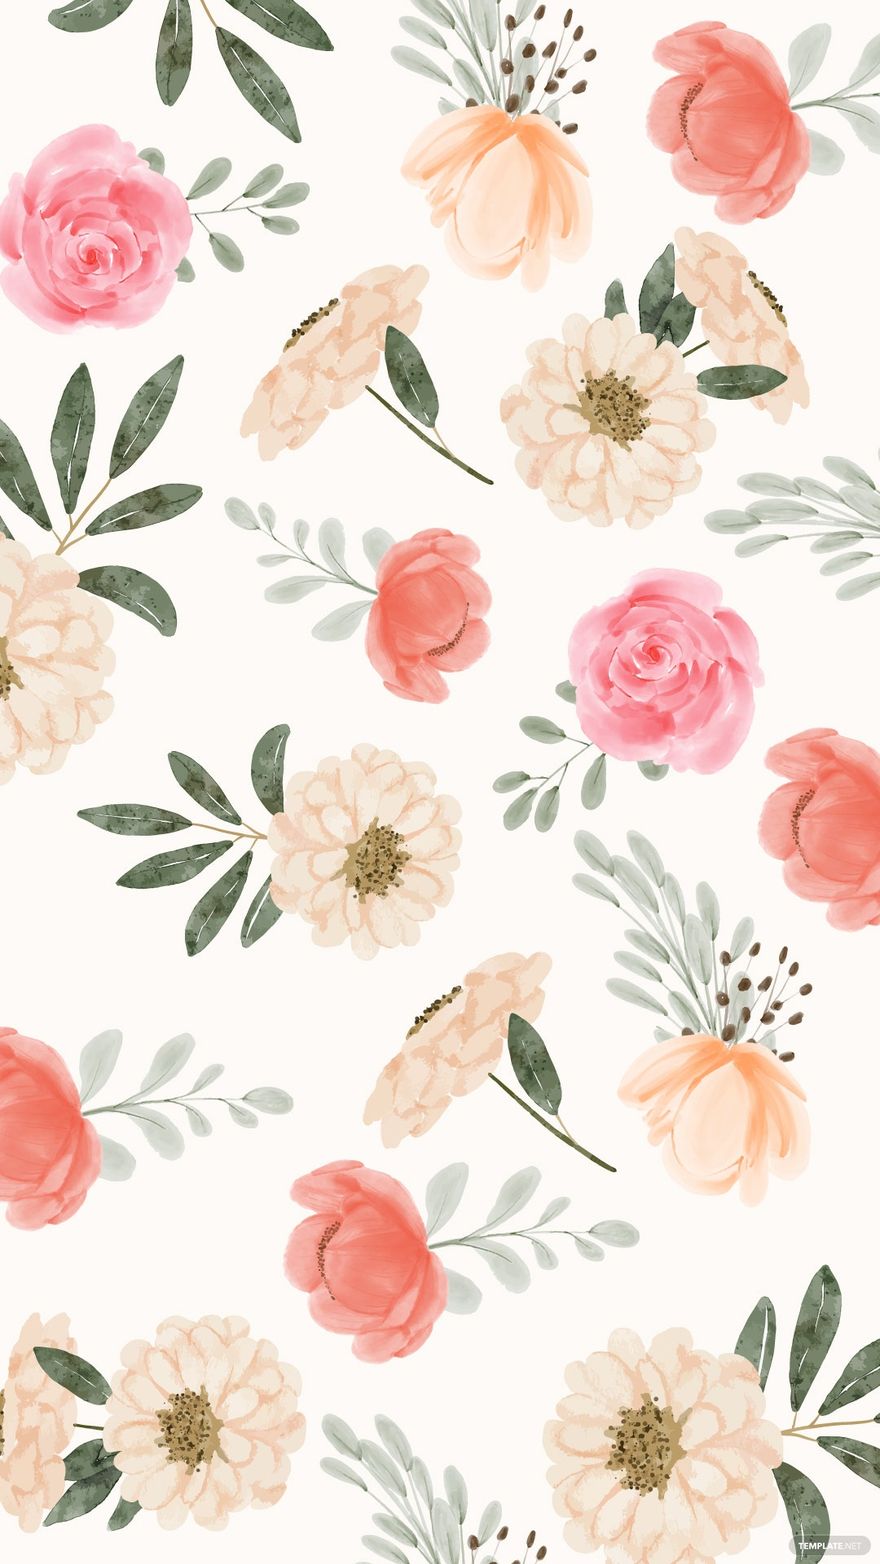 Floral Fabric White Background in JPG, Illustrator, EPS, SVG - Download ...